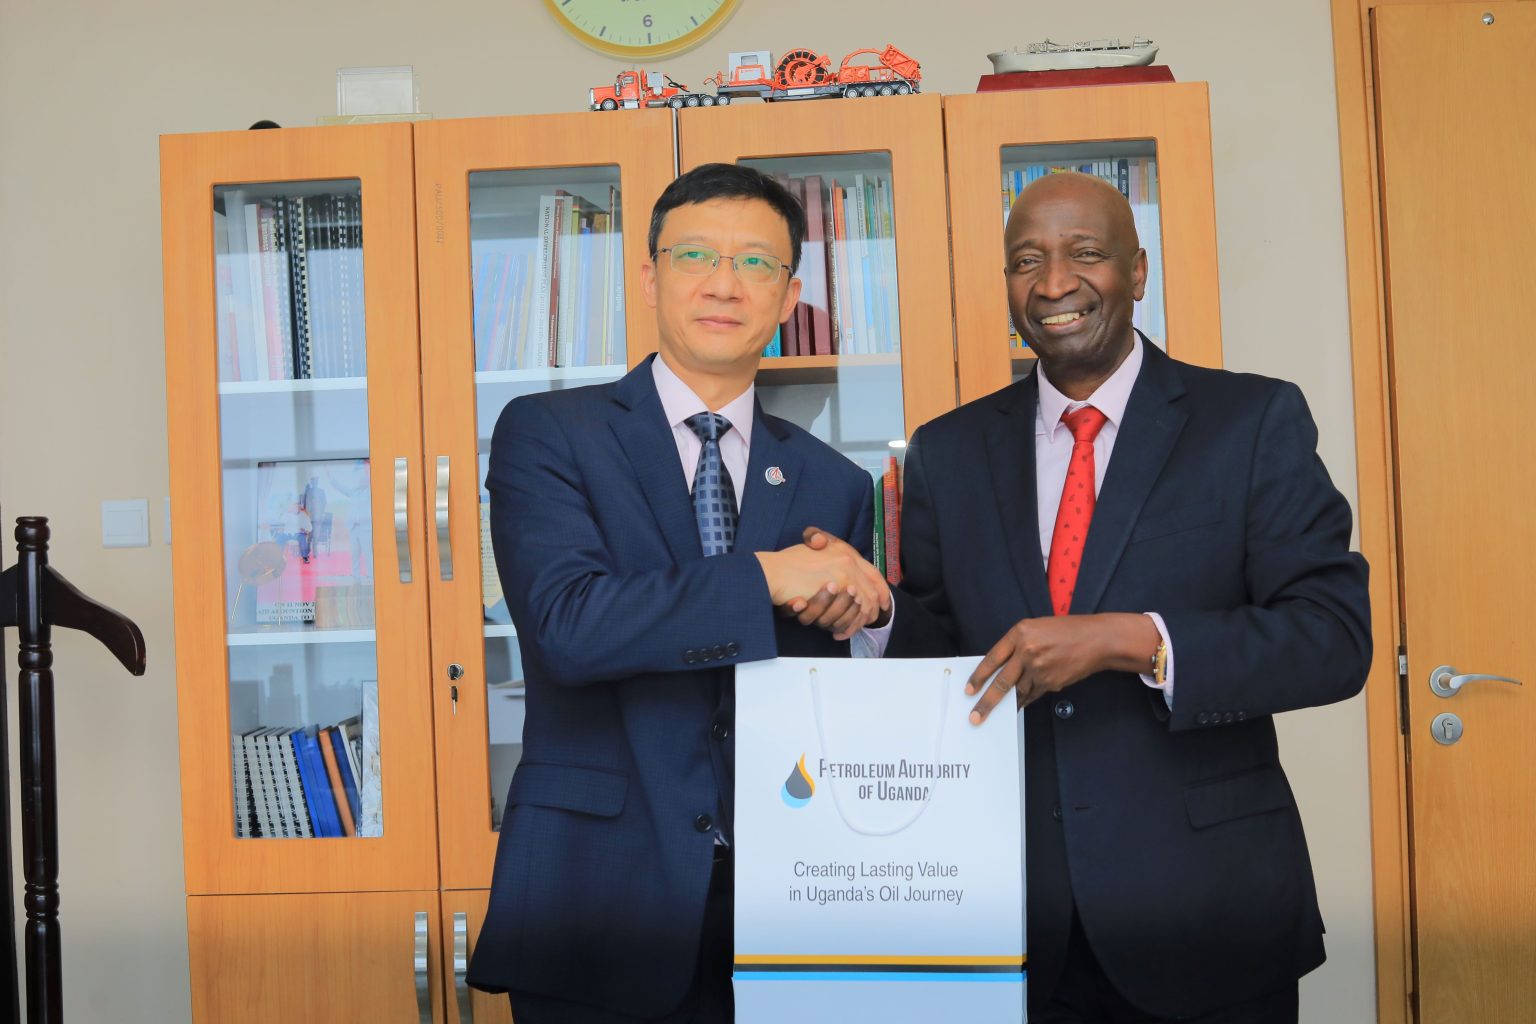 The new President of CNOOC Uganda Limited, Mr. Liu Xaingdong (L) poses with Mr. Ernest Rubondo, the Executive Director of the Petroleum Authority of Uganda (R)